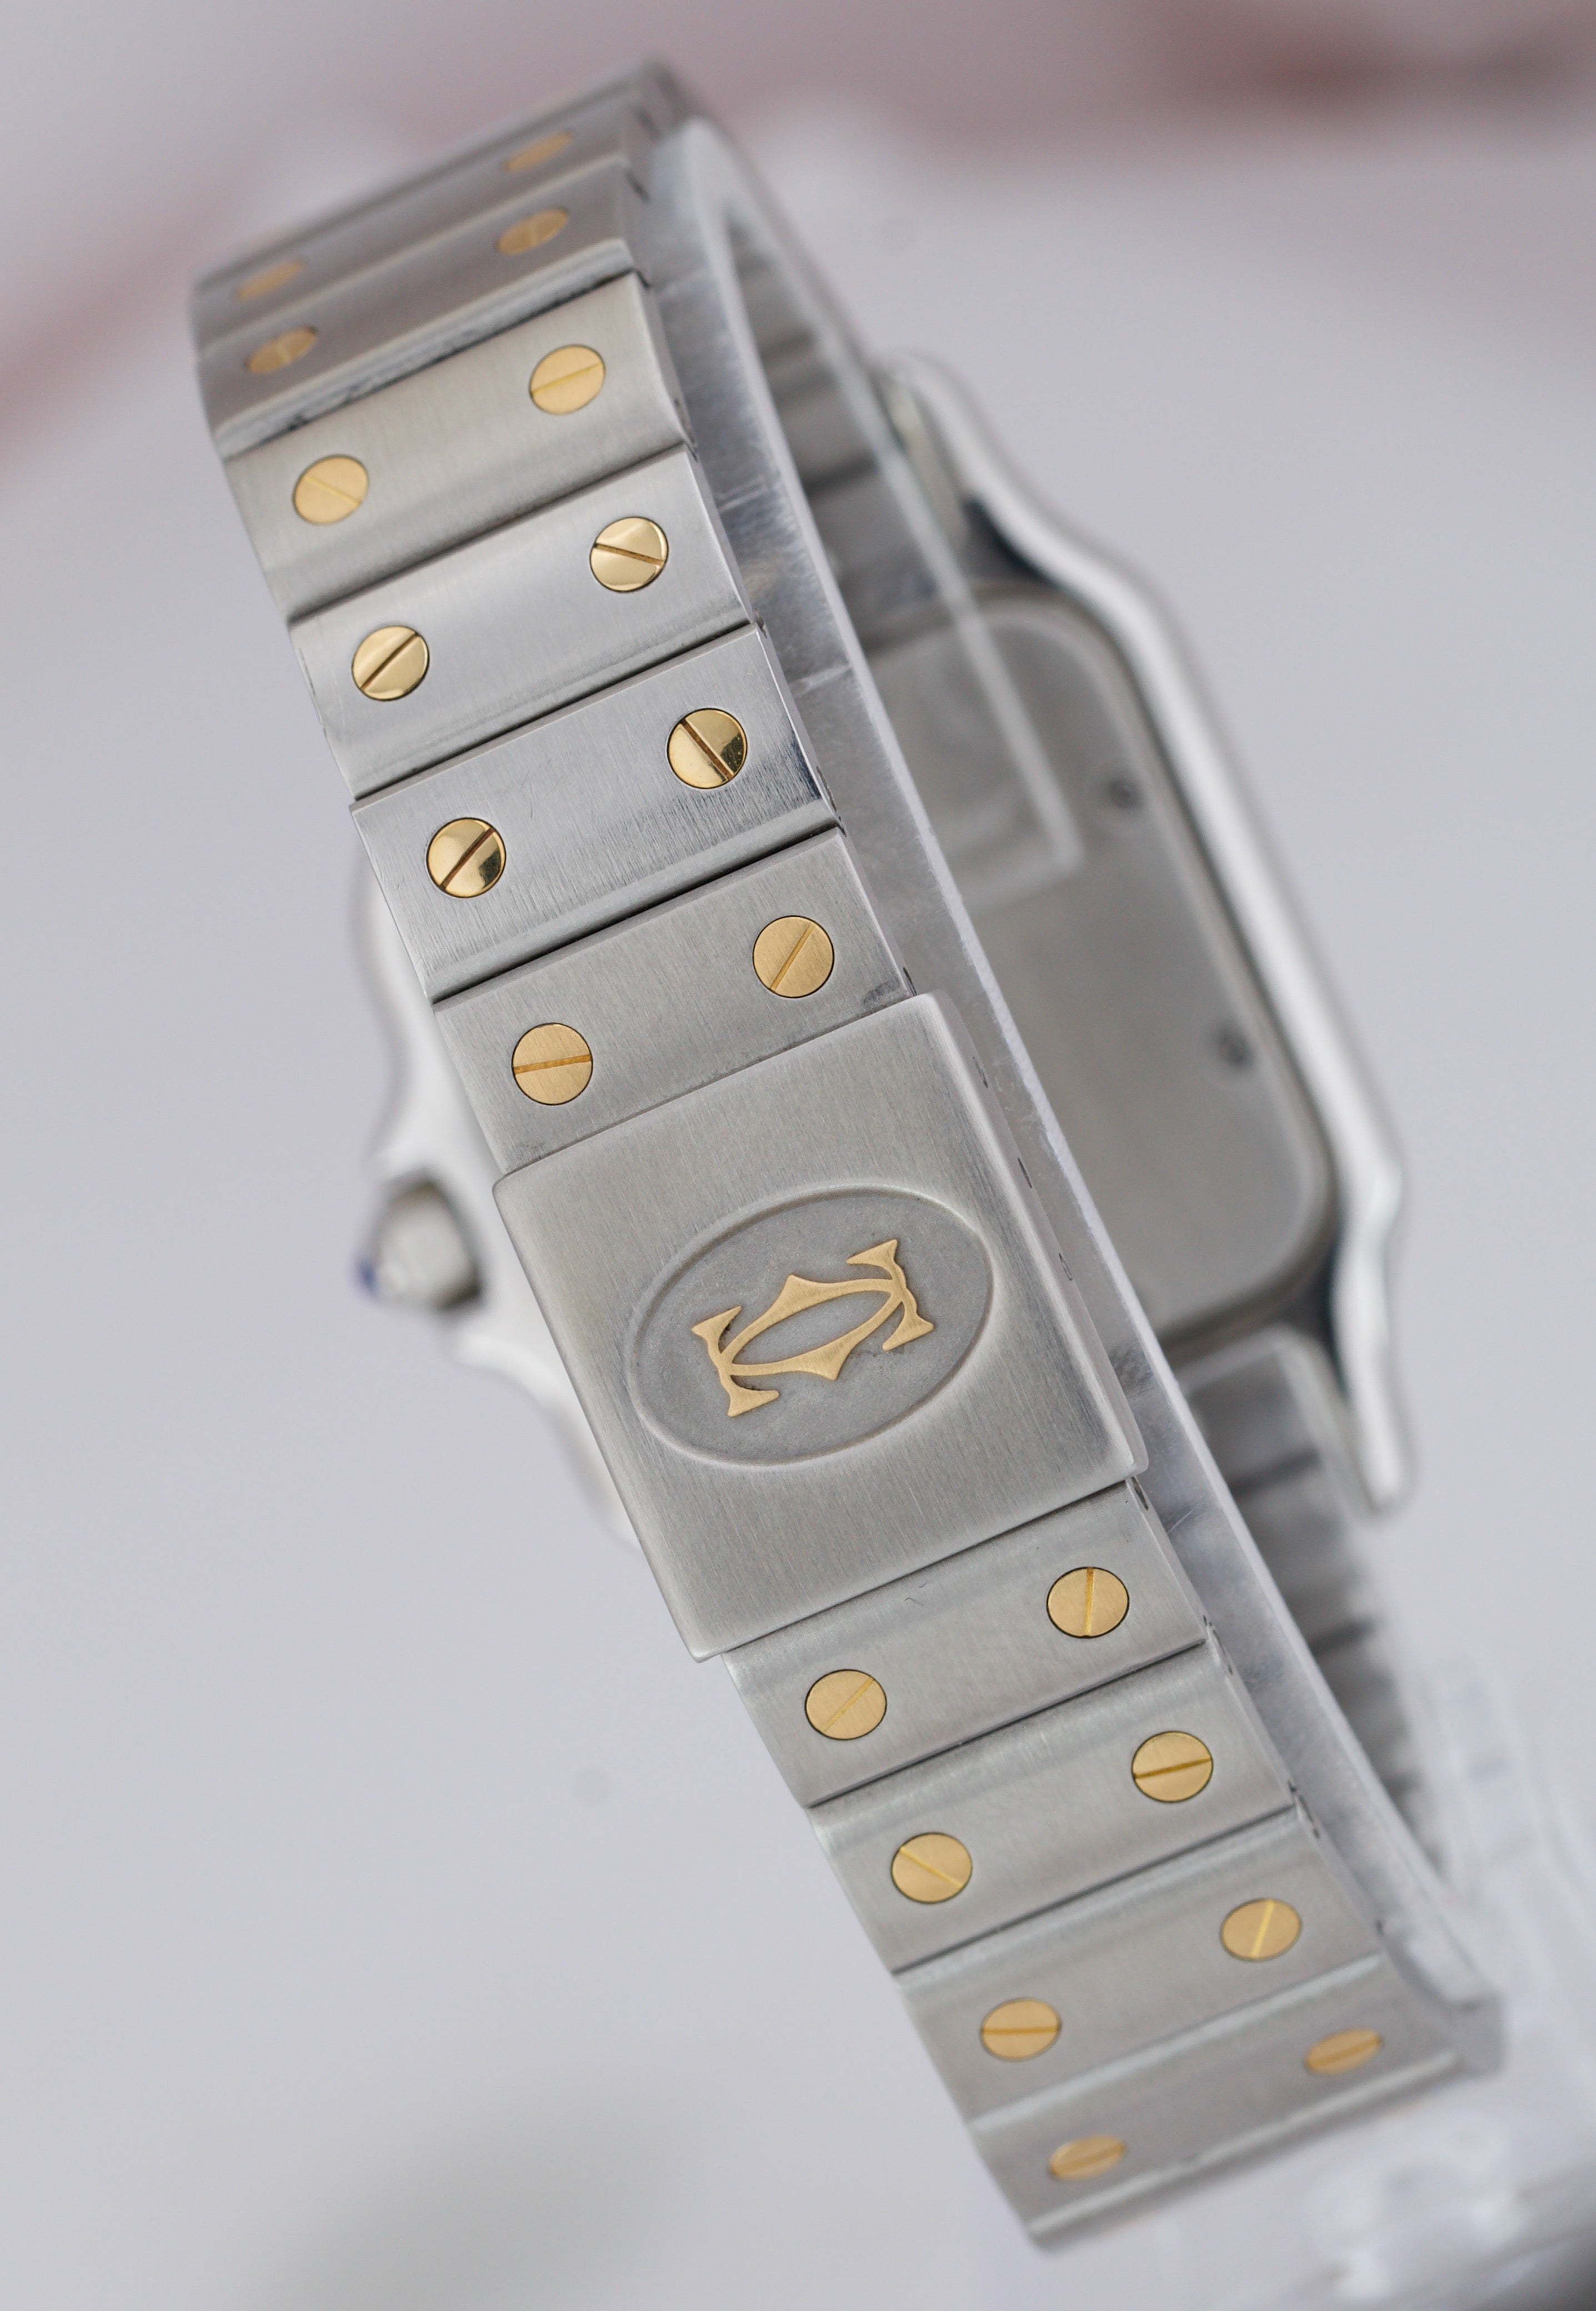 Cartier Santos Galbee 187901 18k Gold Steel 29mm Roman Quartz Two-Tone Watch